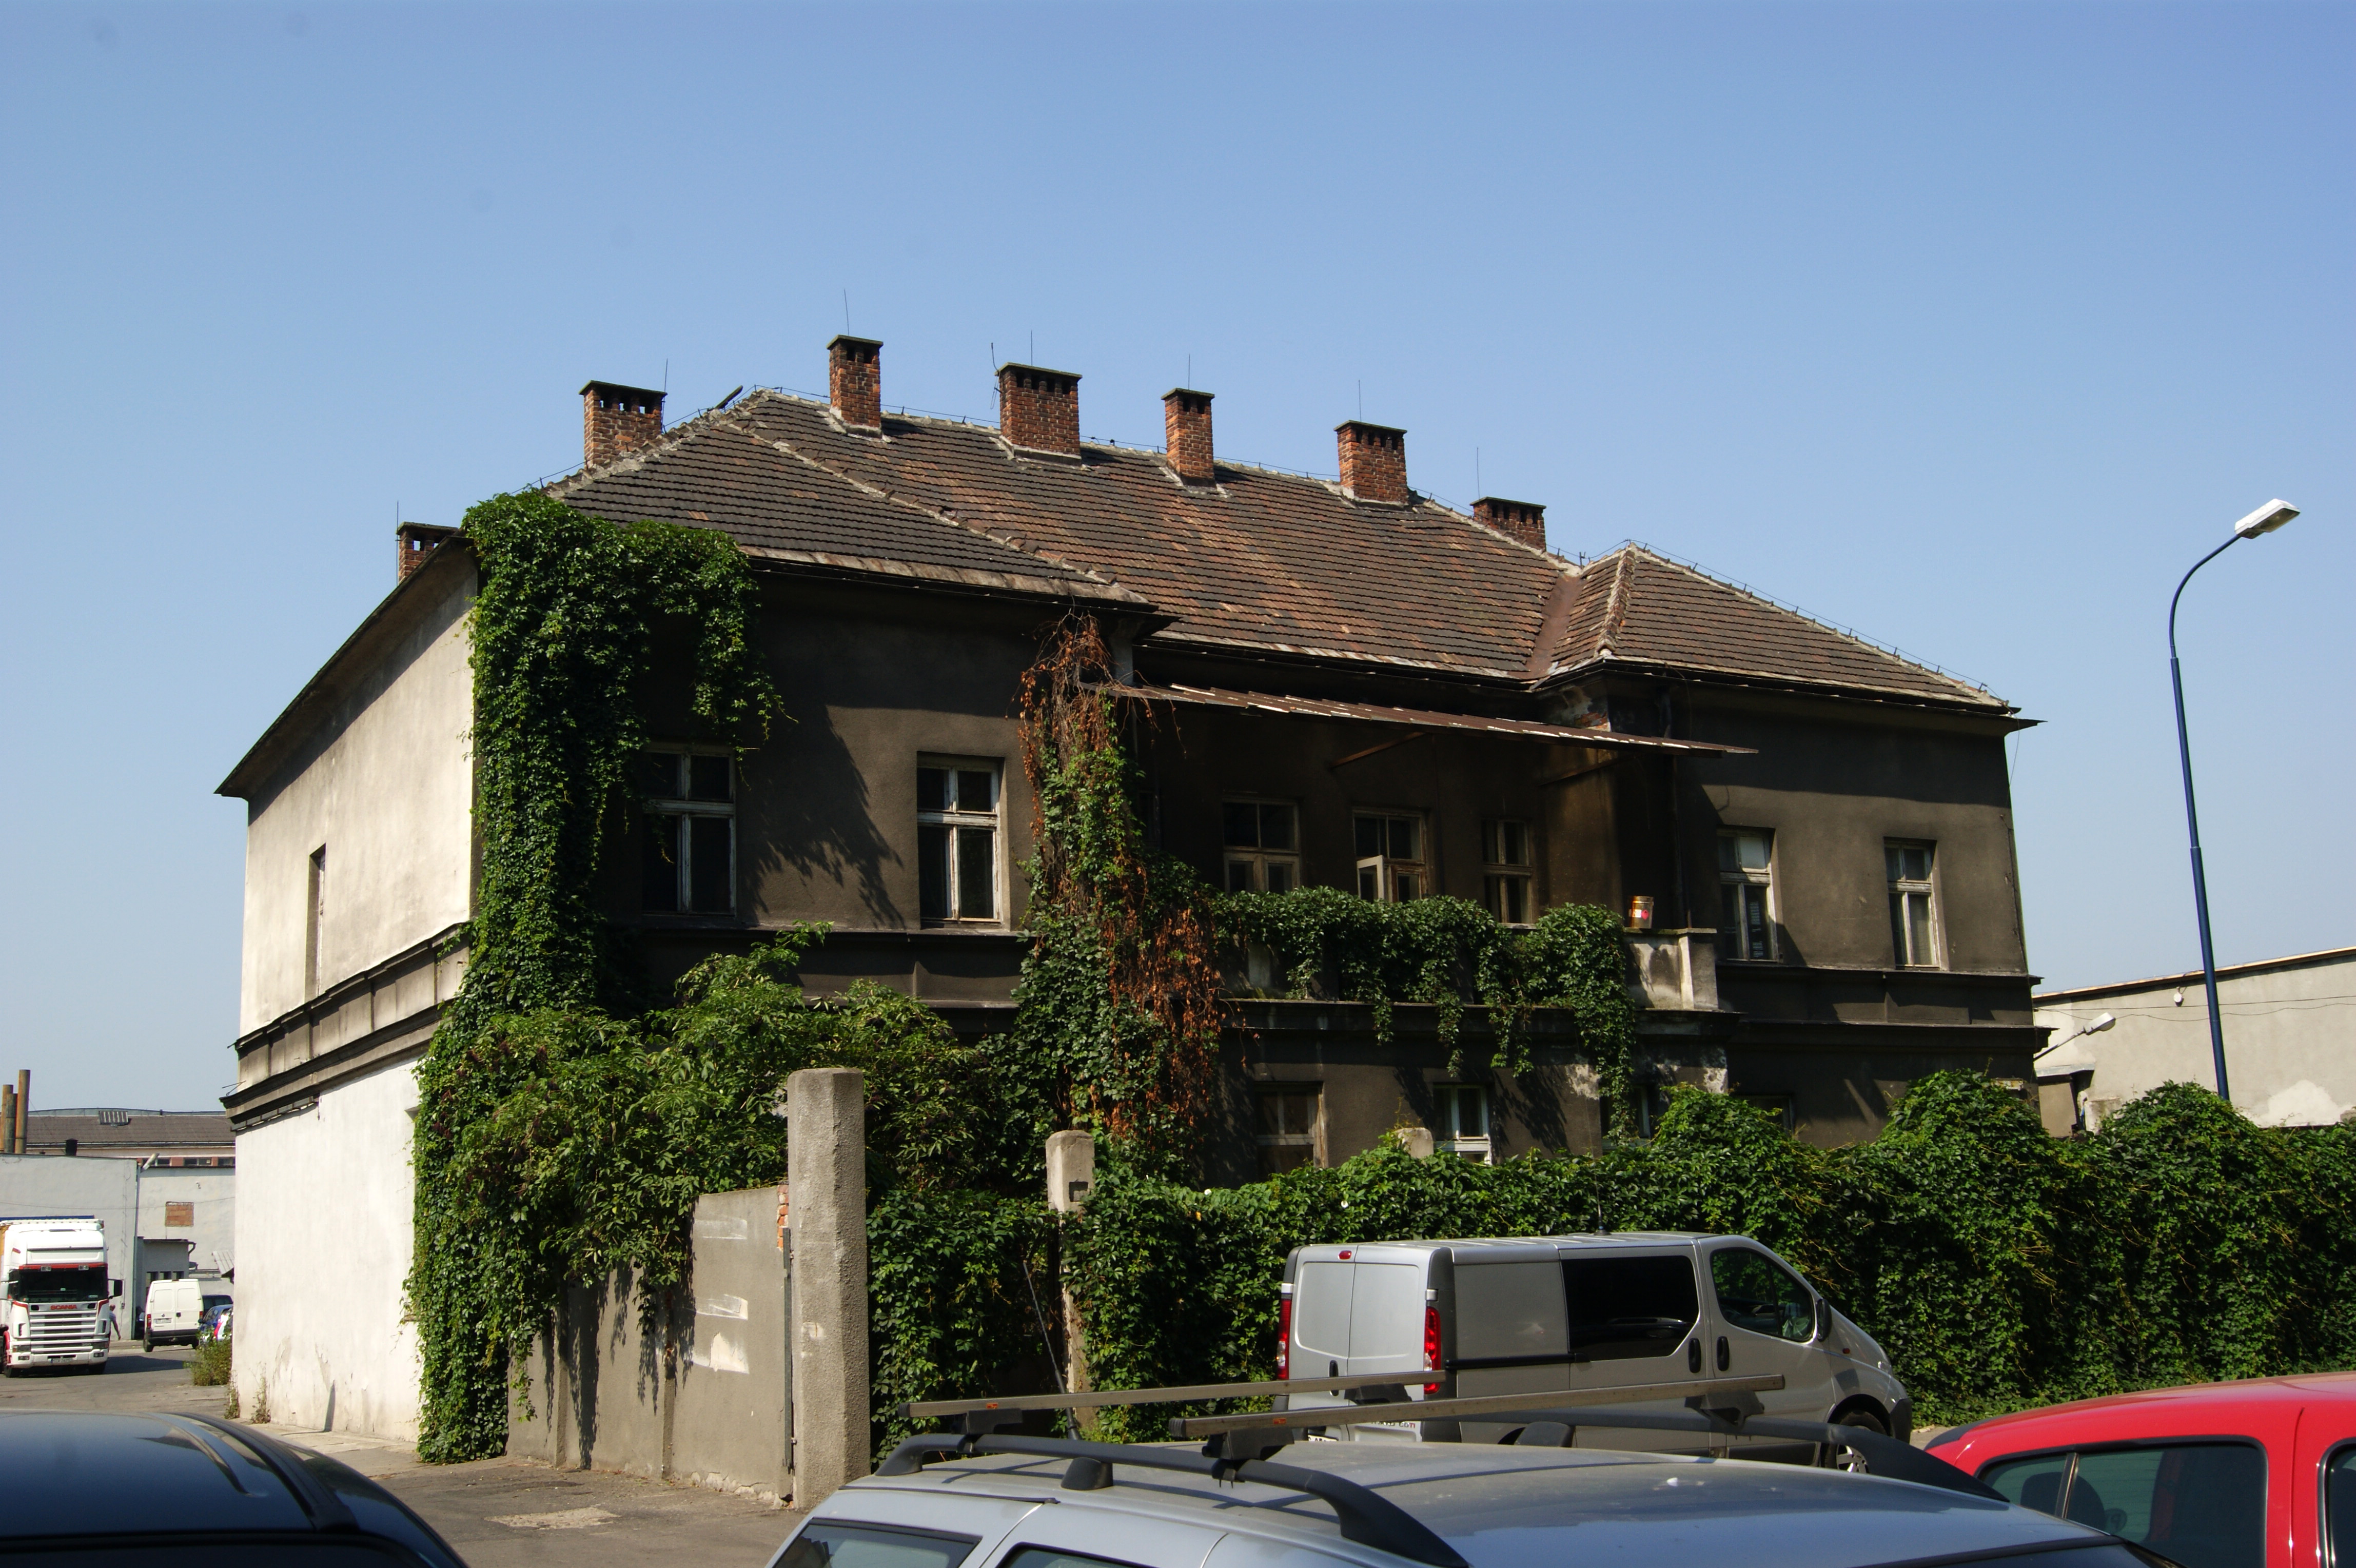 Oskar Schindler's Villa, 9 Romanowicza street, Krakow, Poland, by Zygmunt Put Zetpe0202, CC BY-SA 4.0, via Wikimedia Commons